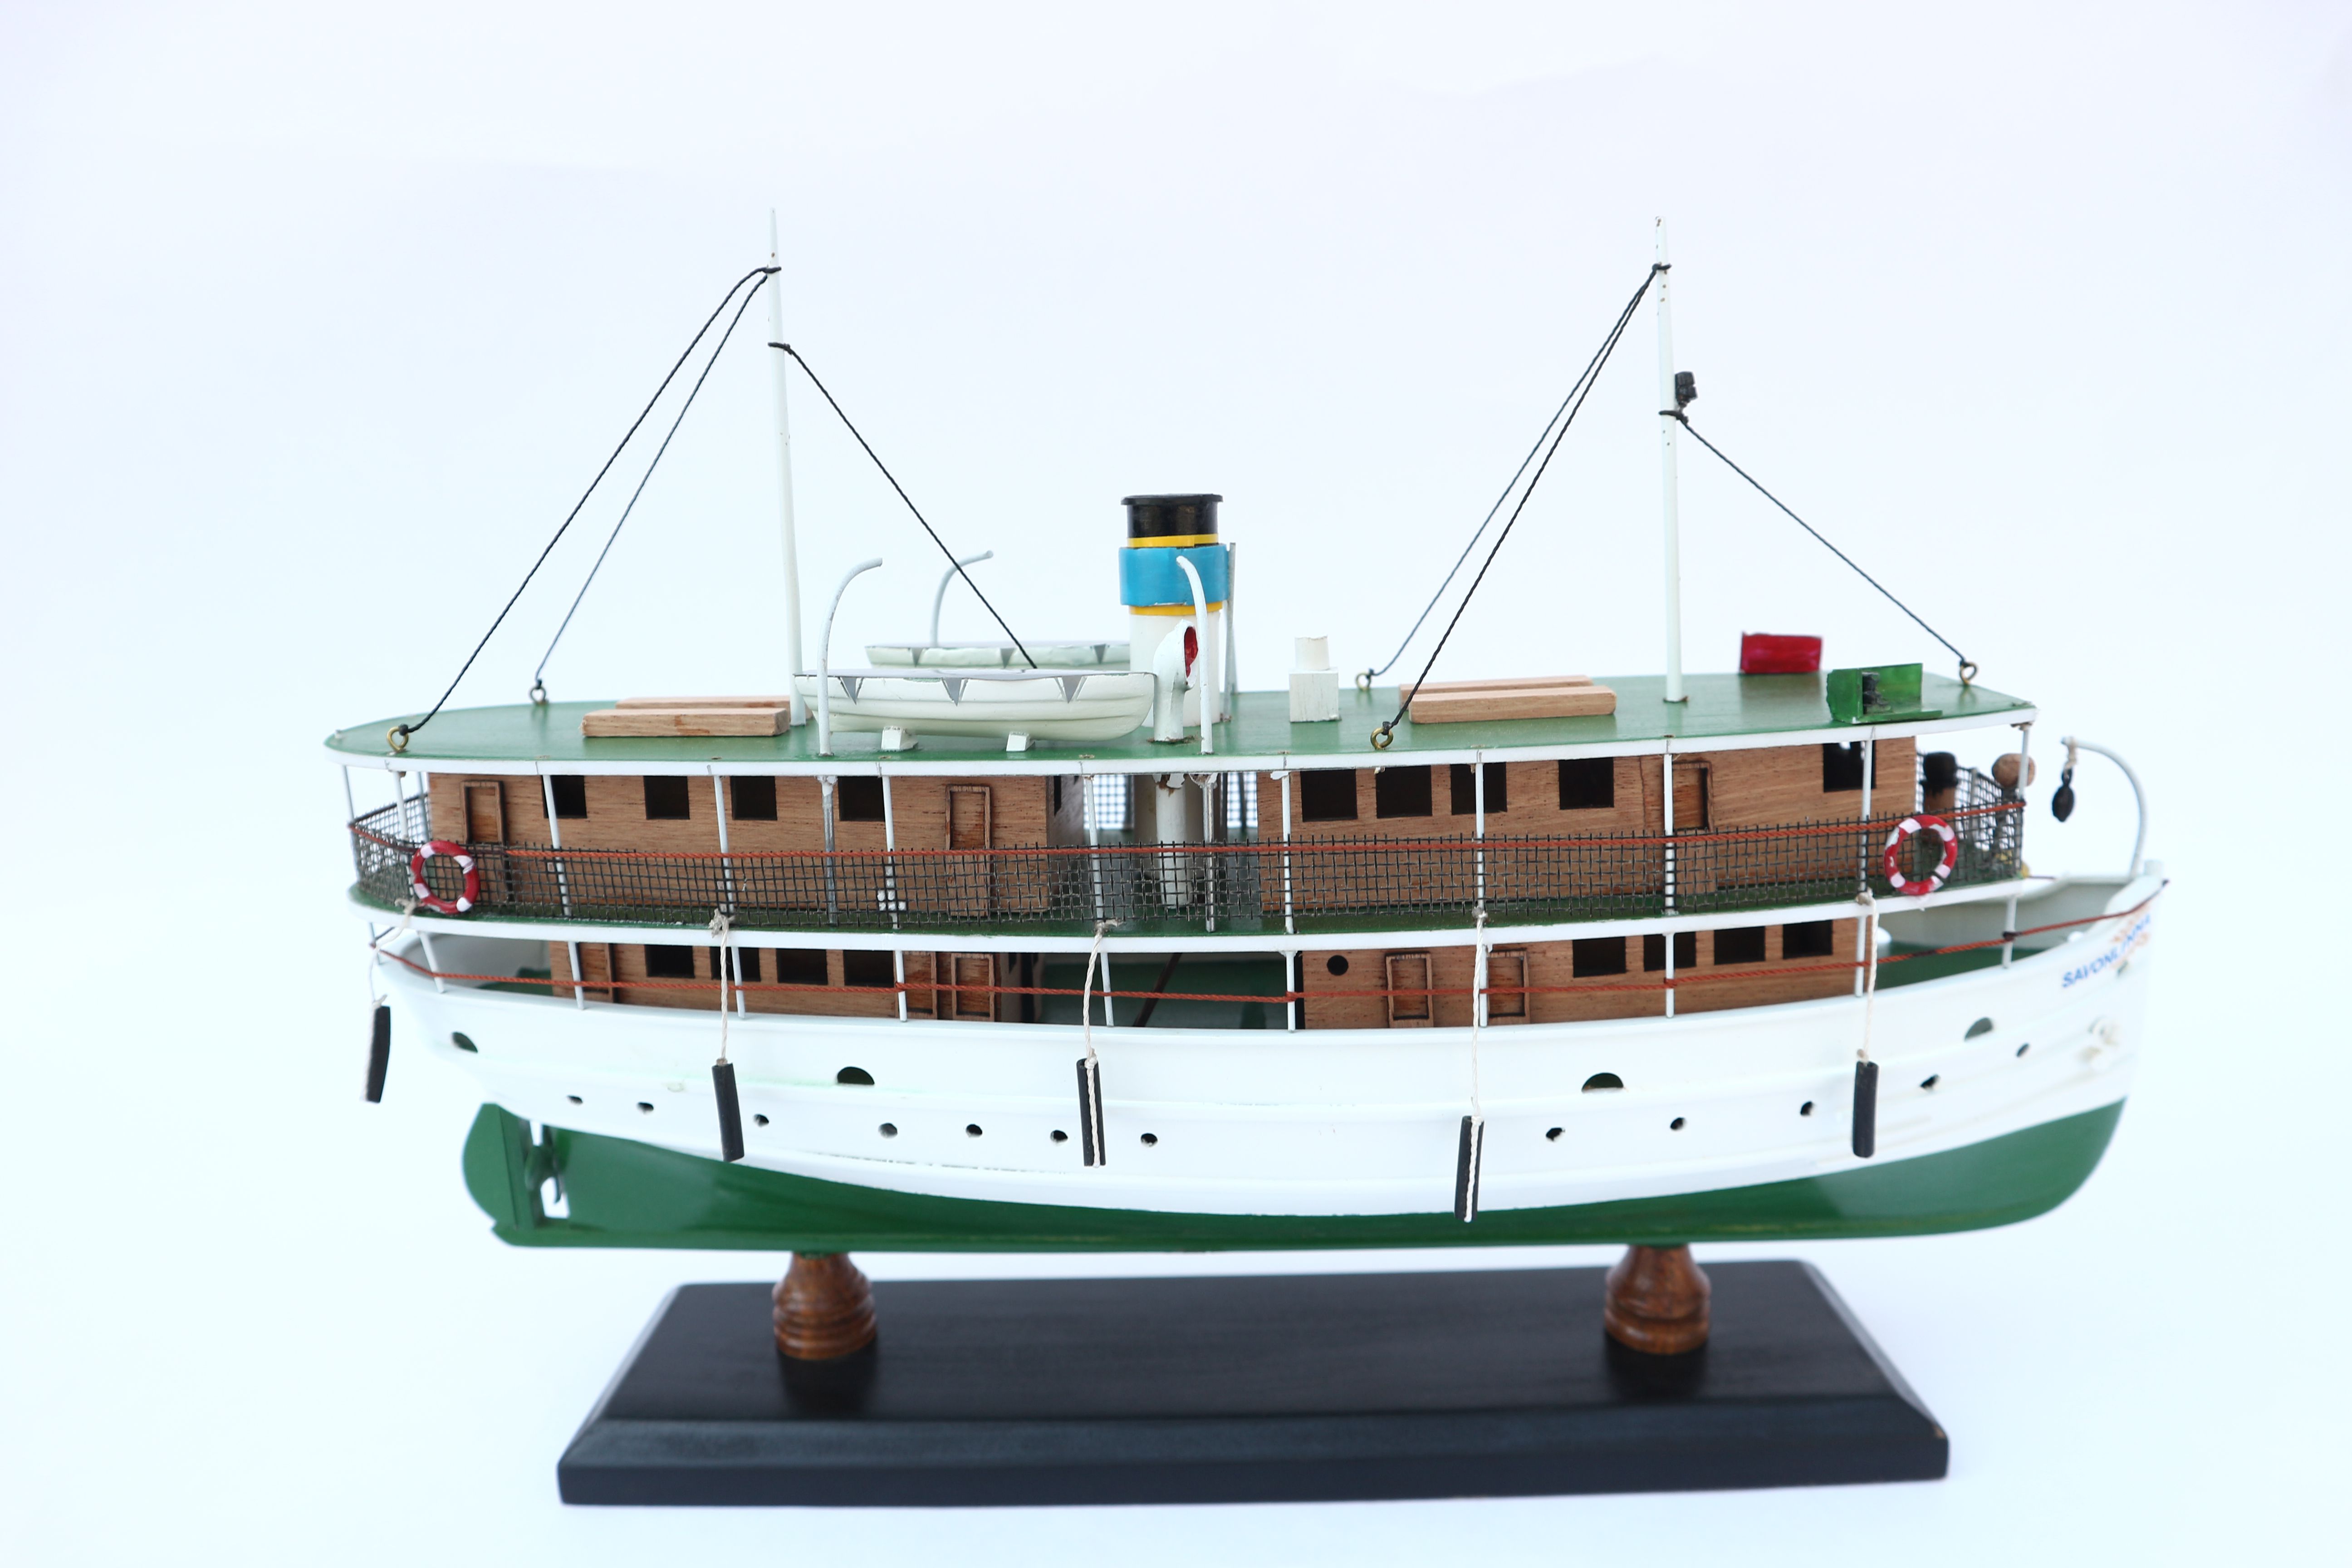 SS Savonlinna Ship Model - GN